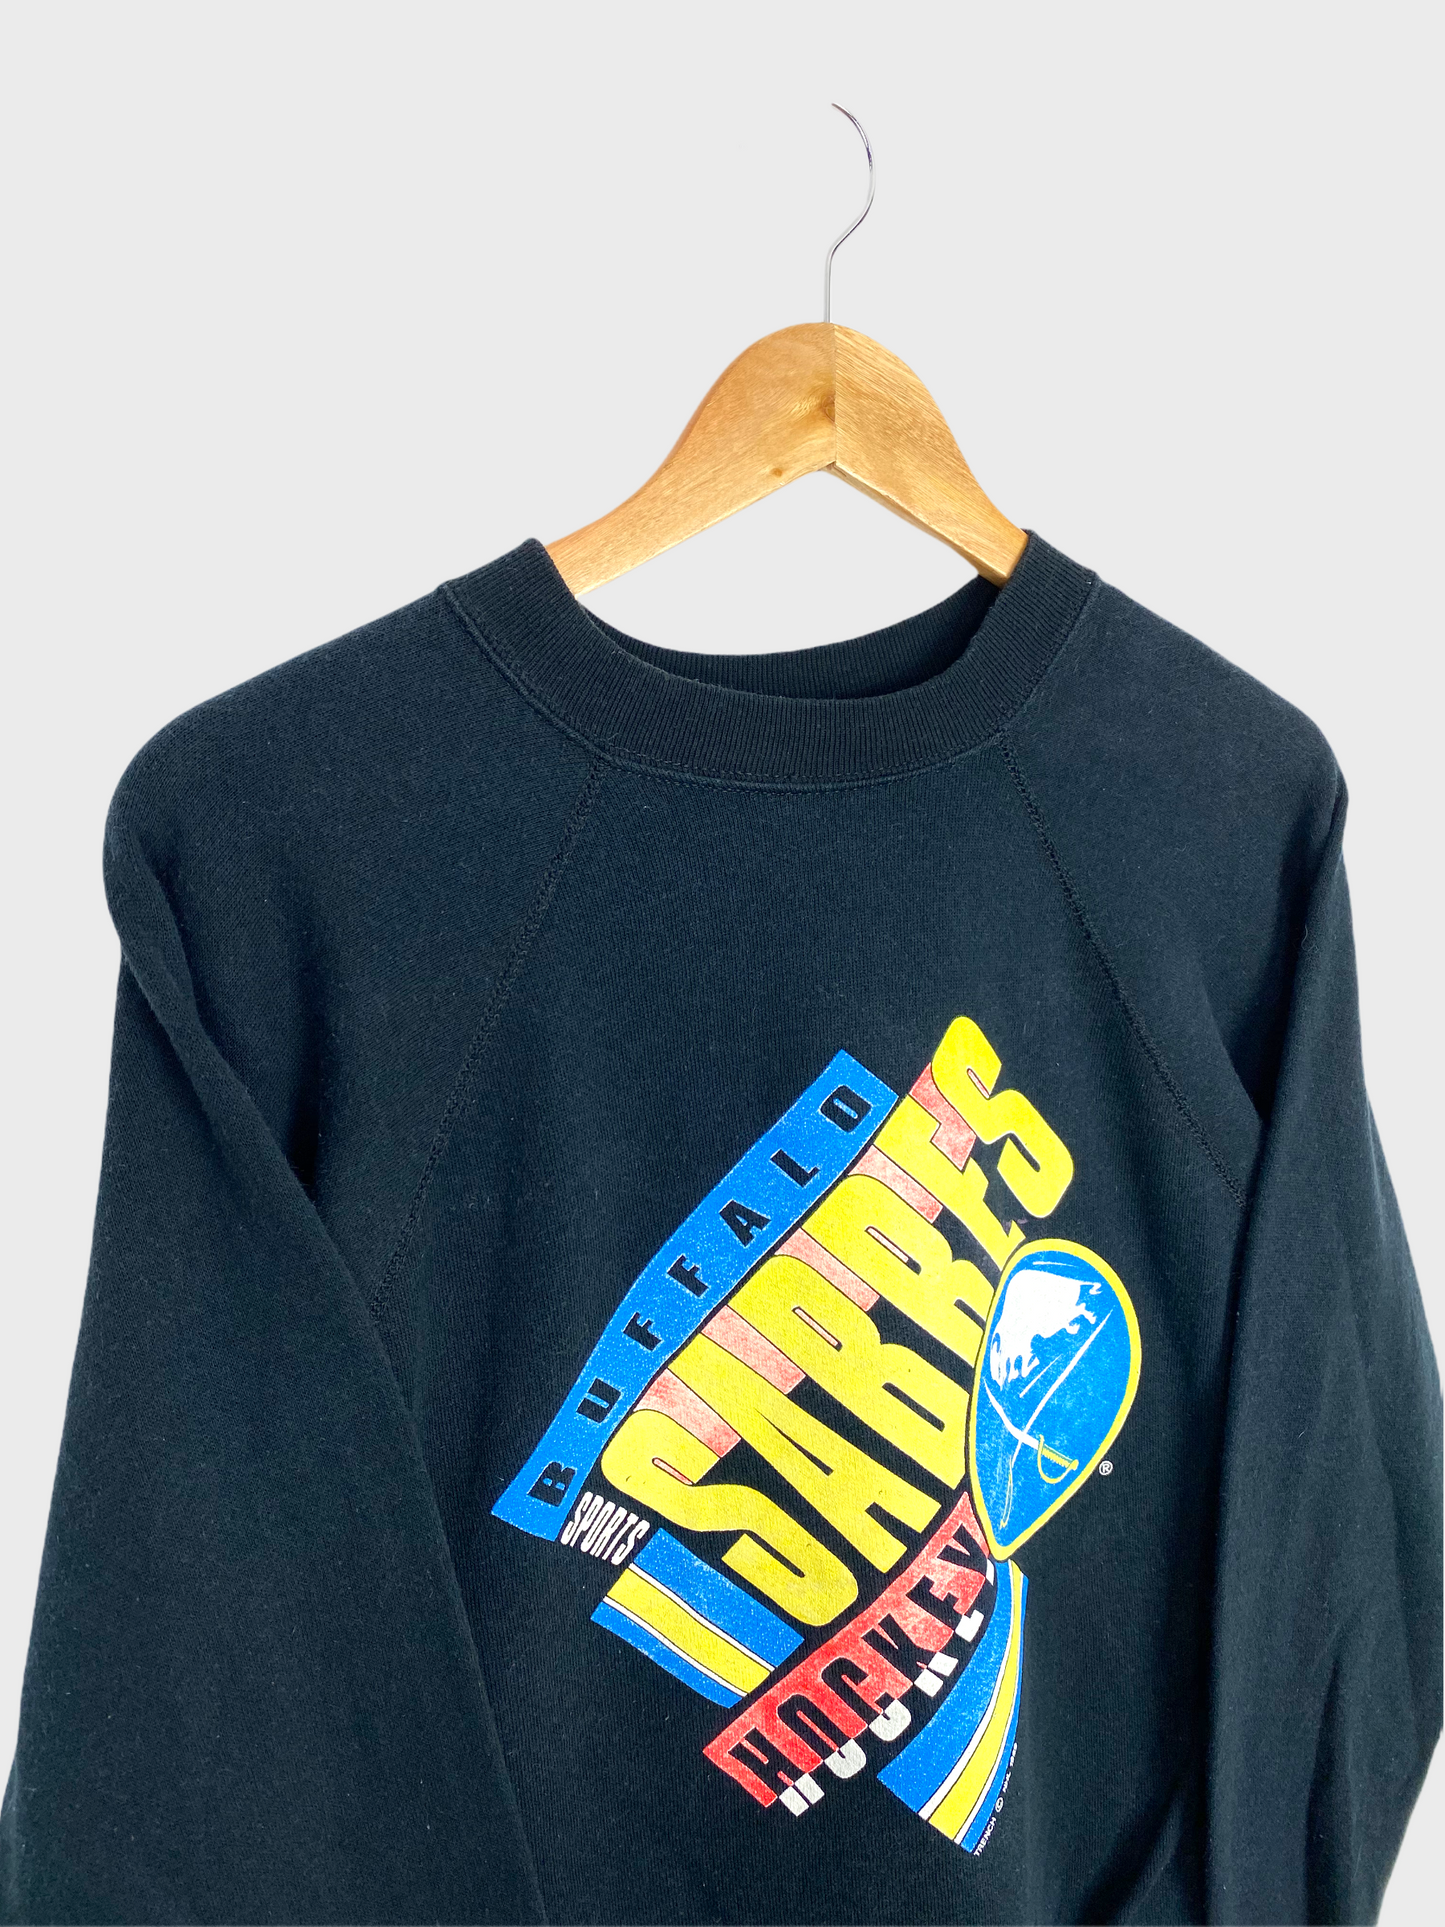 1989 Buffalo Sabres USA Made Light NHL Vintage Sweatshirt Size 6